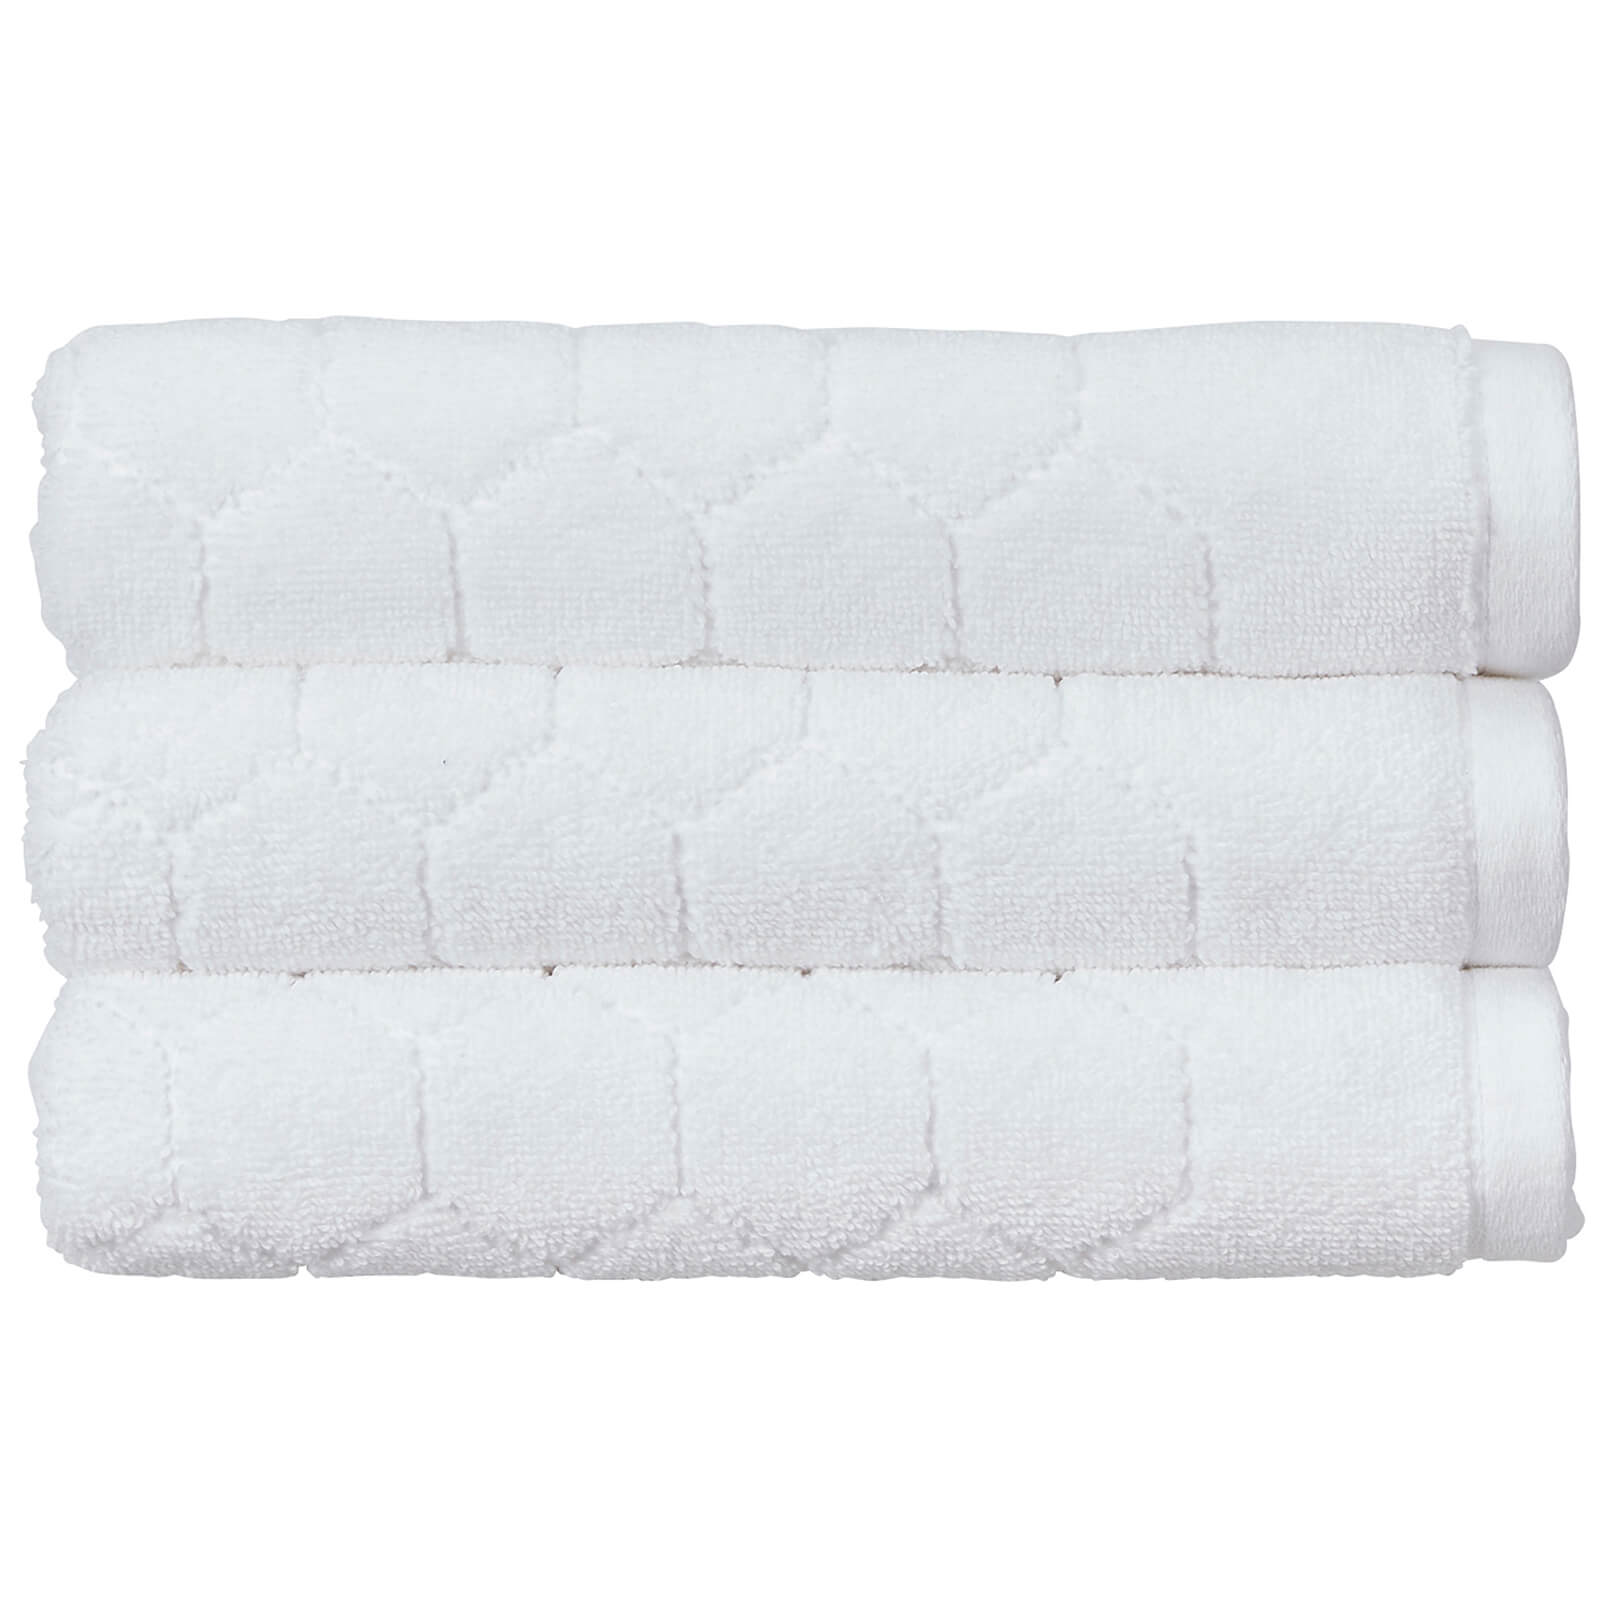 Christy Honeycomb Bath Towel - Set of 2 - White